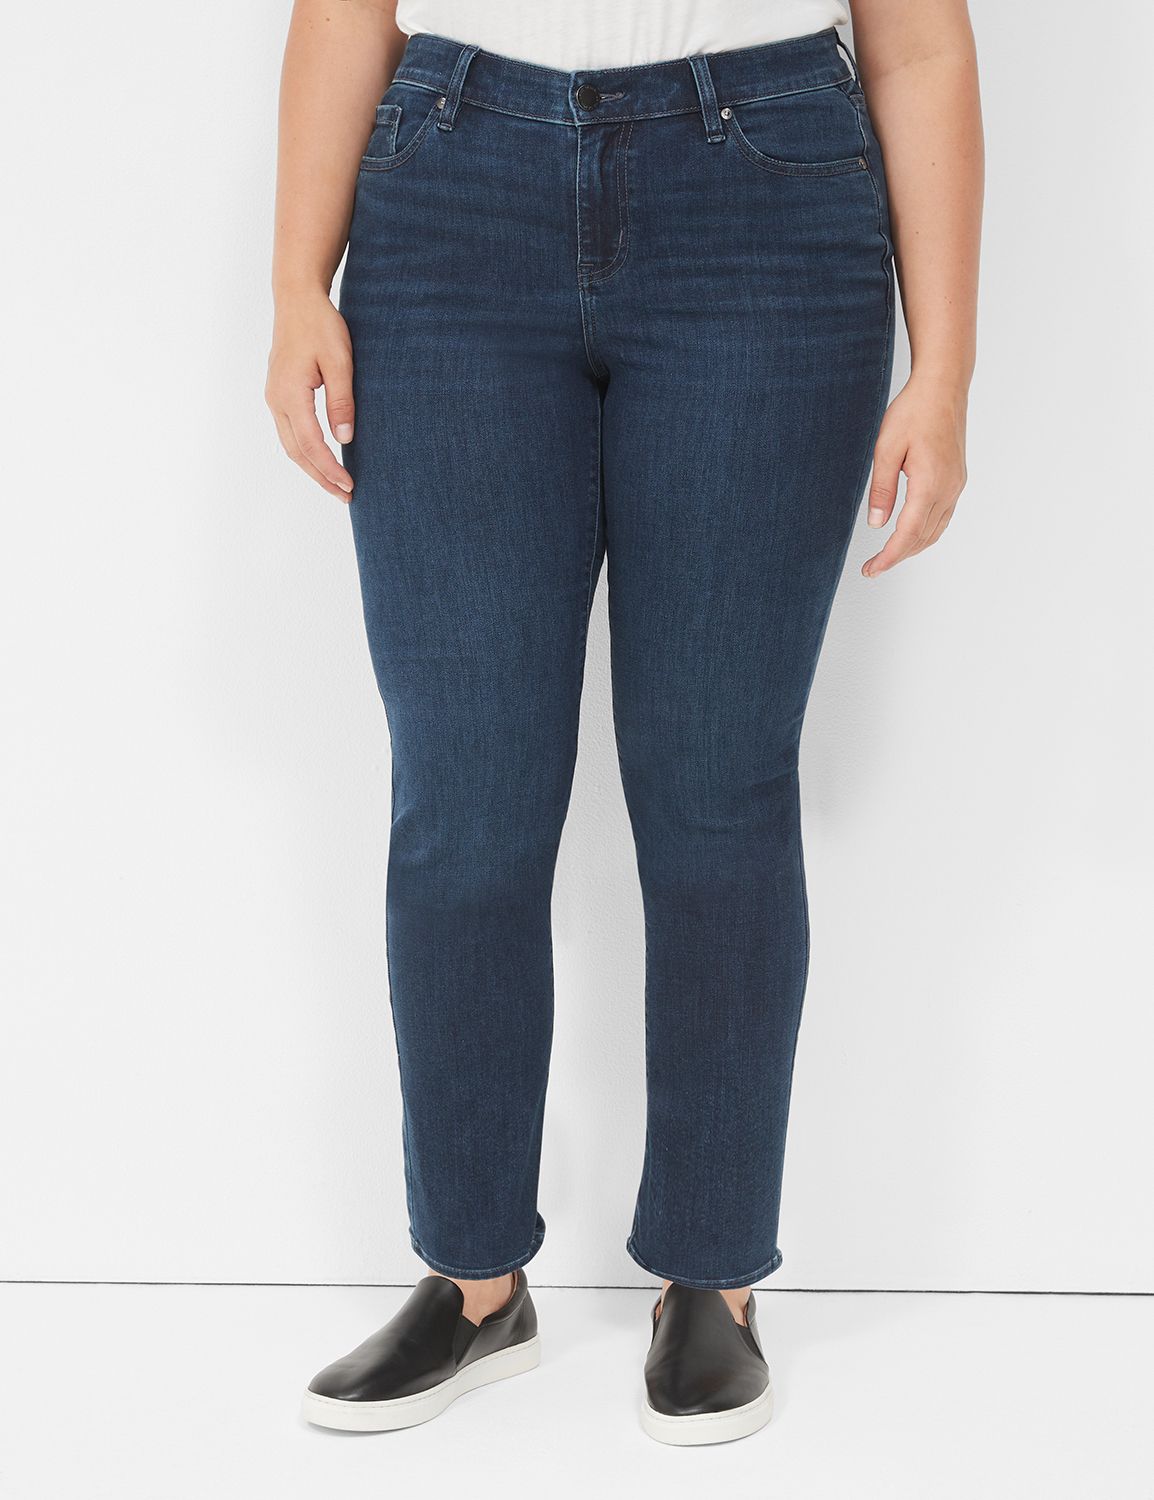 Lane Bryant Jeans Womens 28 Plus Size Black Tapered Denim Pants Ladies